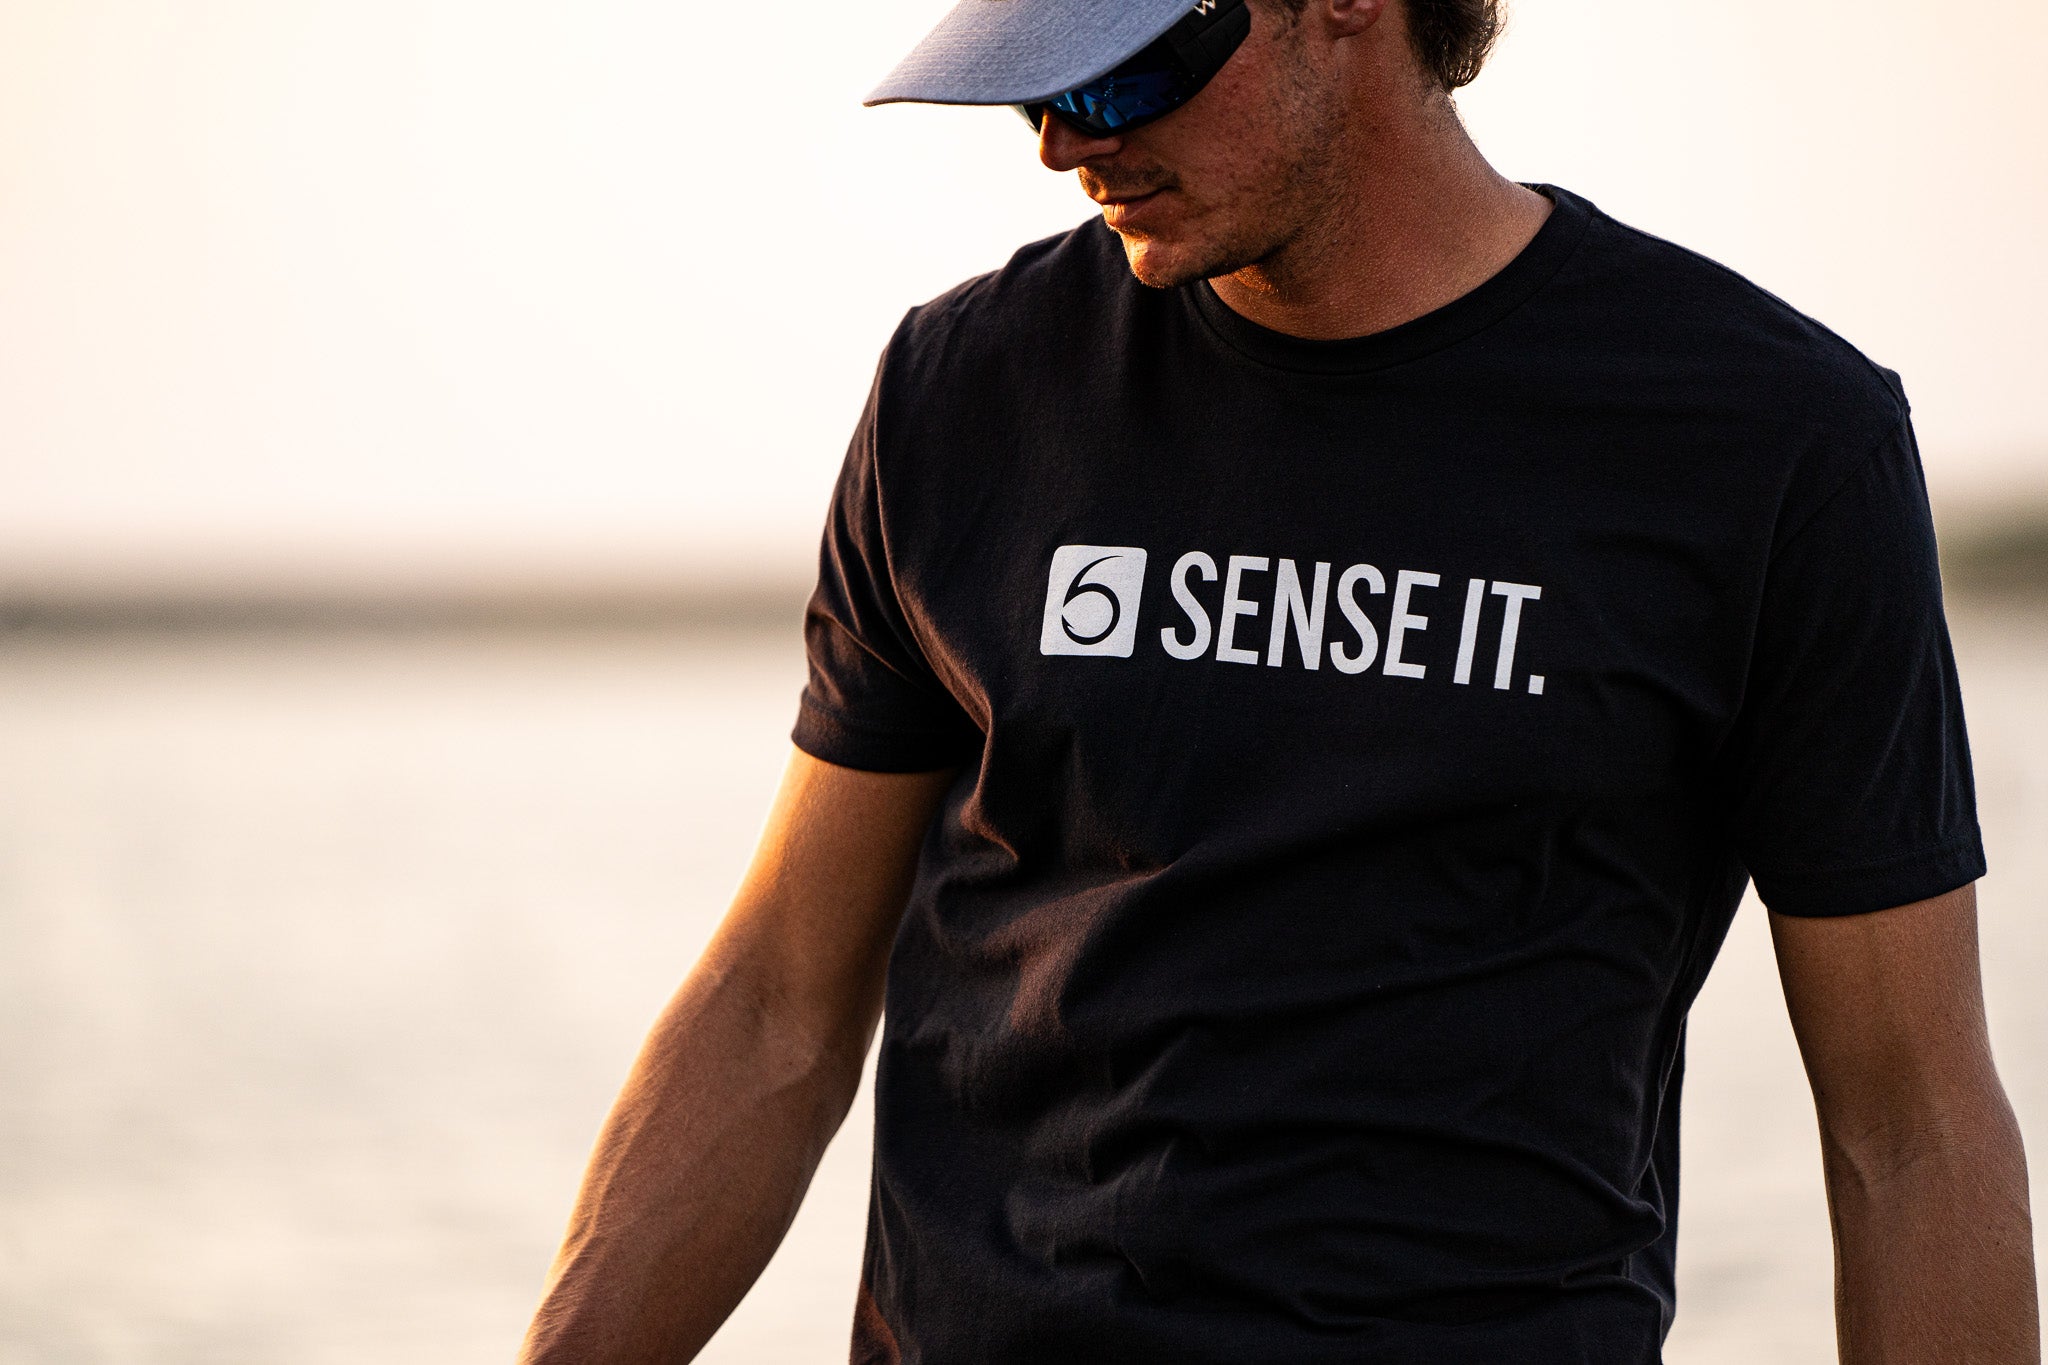 6th Sense Fishing - Premium Tees - Sense It. MD / Black